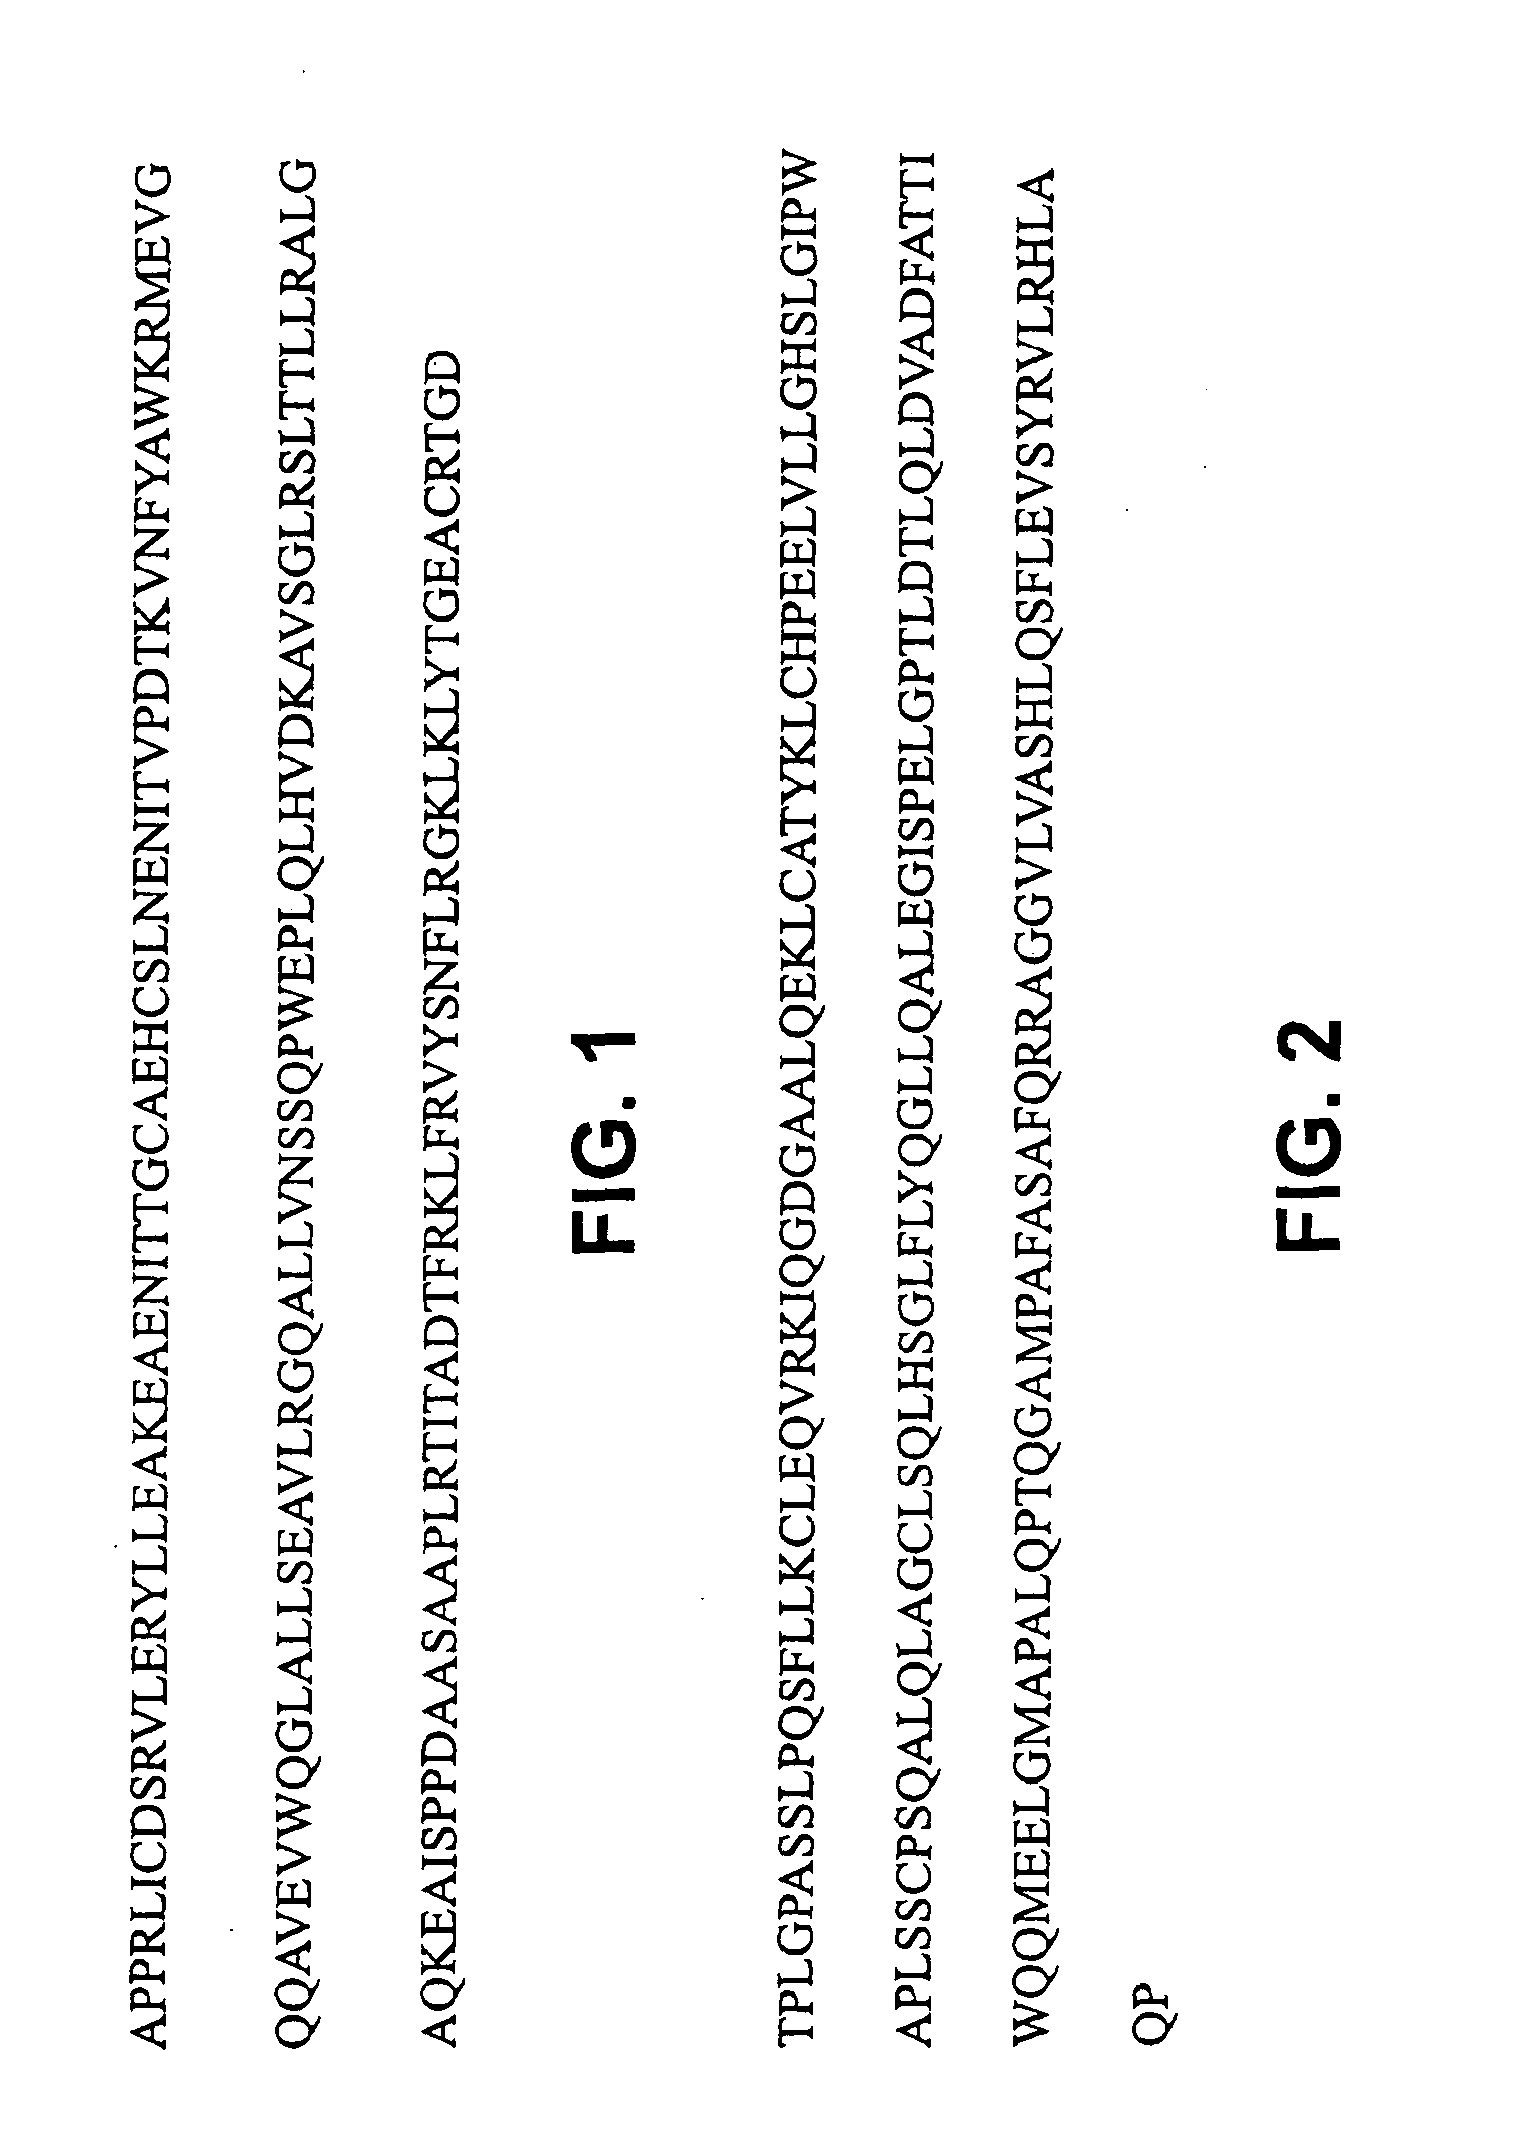 Acryloyloxyethylphosphorylcholine Containing Polymer Conjugates and Their Preparation